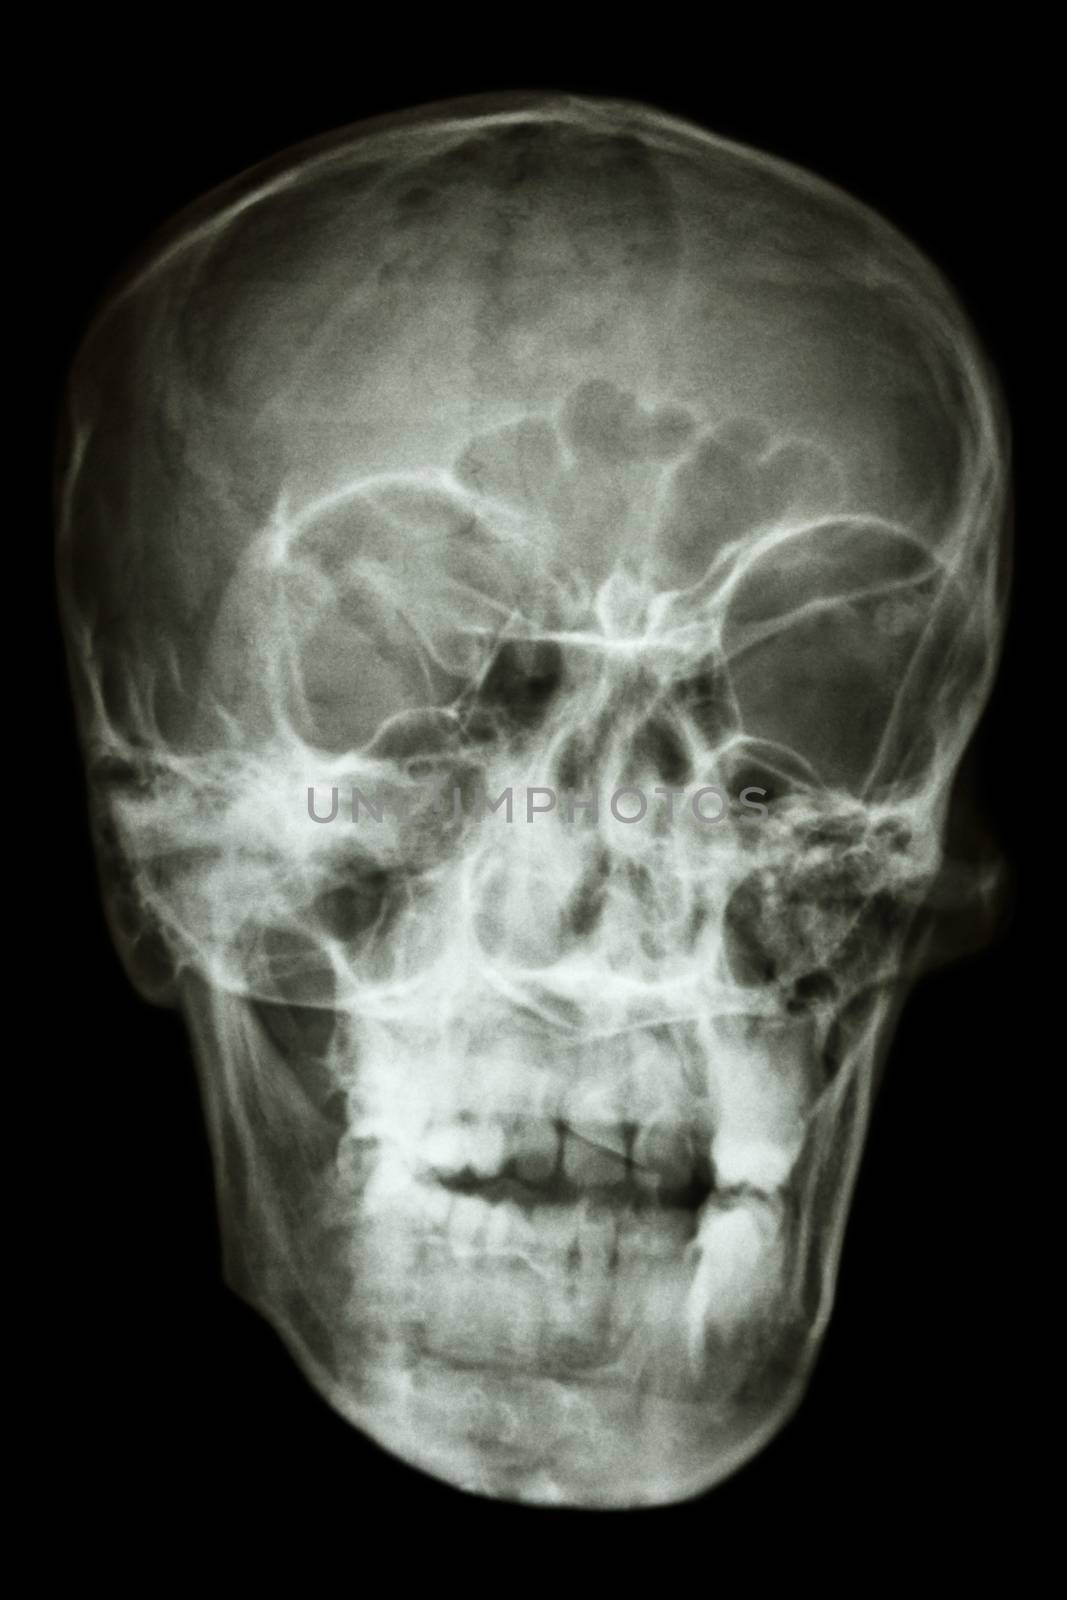 film x-ray asian people's skull (Thai people)